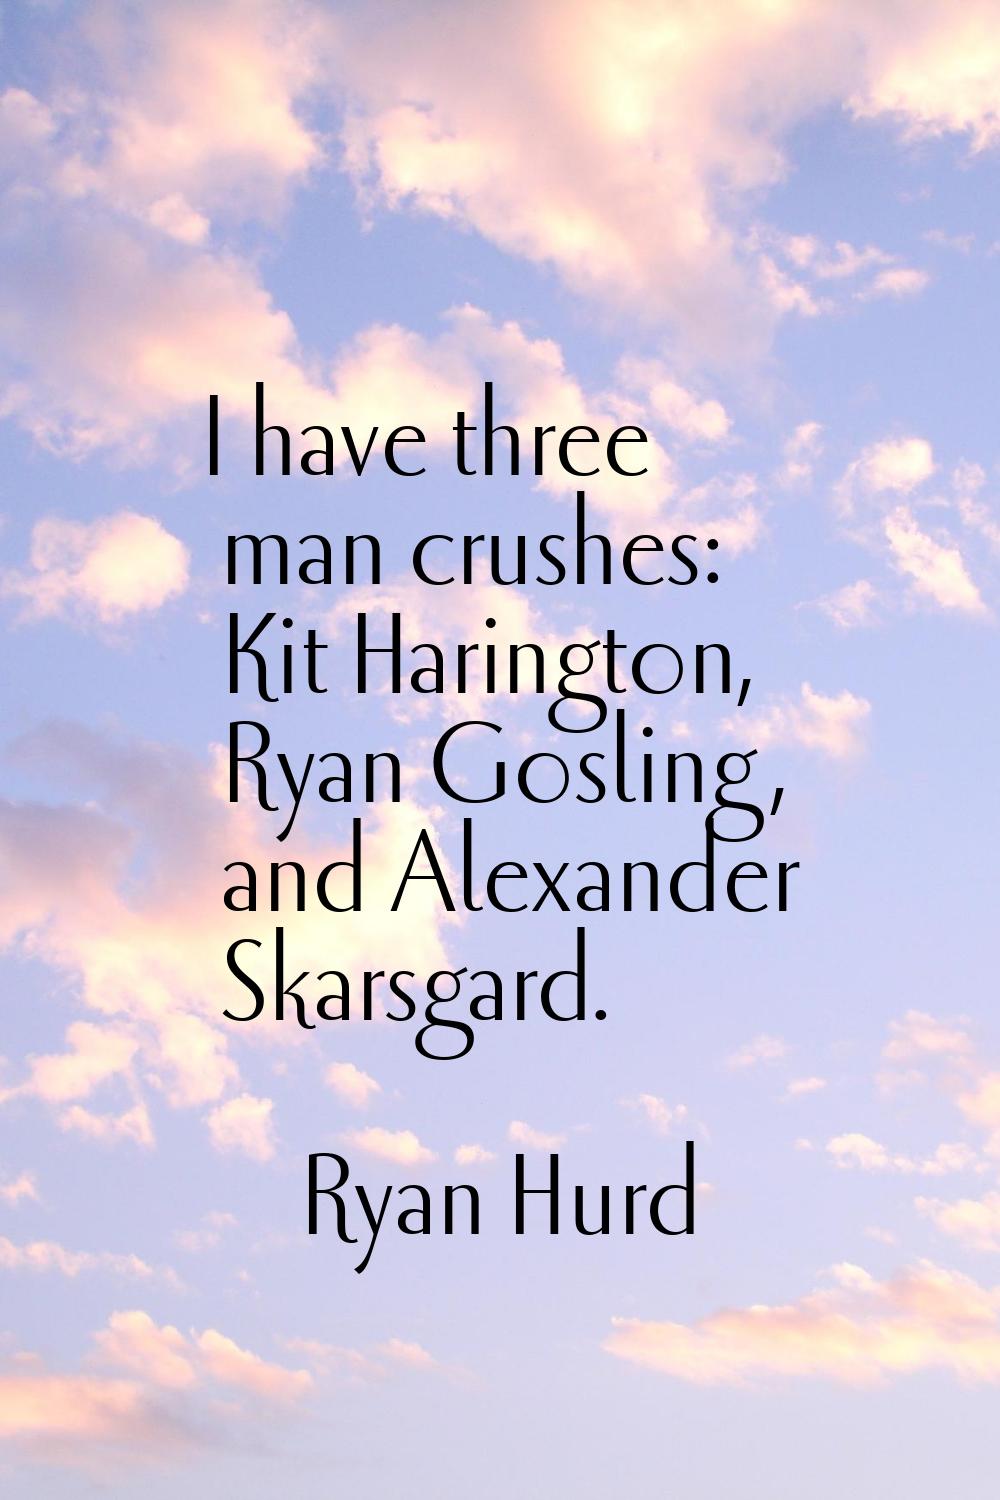 I have three man crushes: Kit Harington, Ryan Gosling, and Alexander Skarsgard.